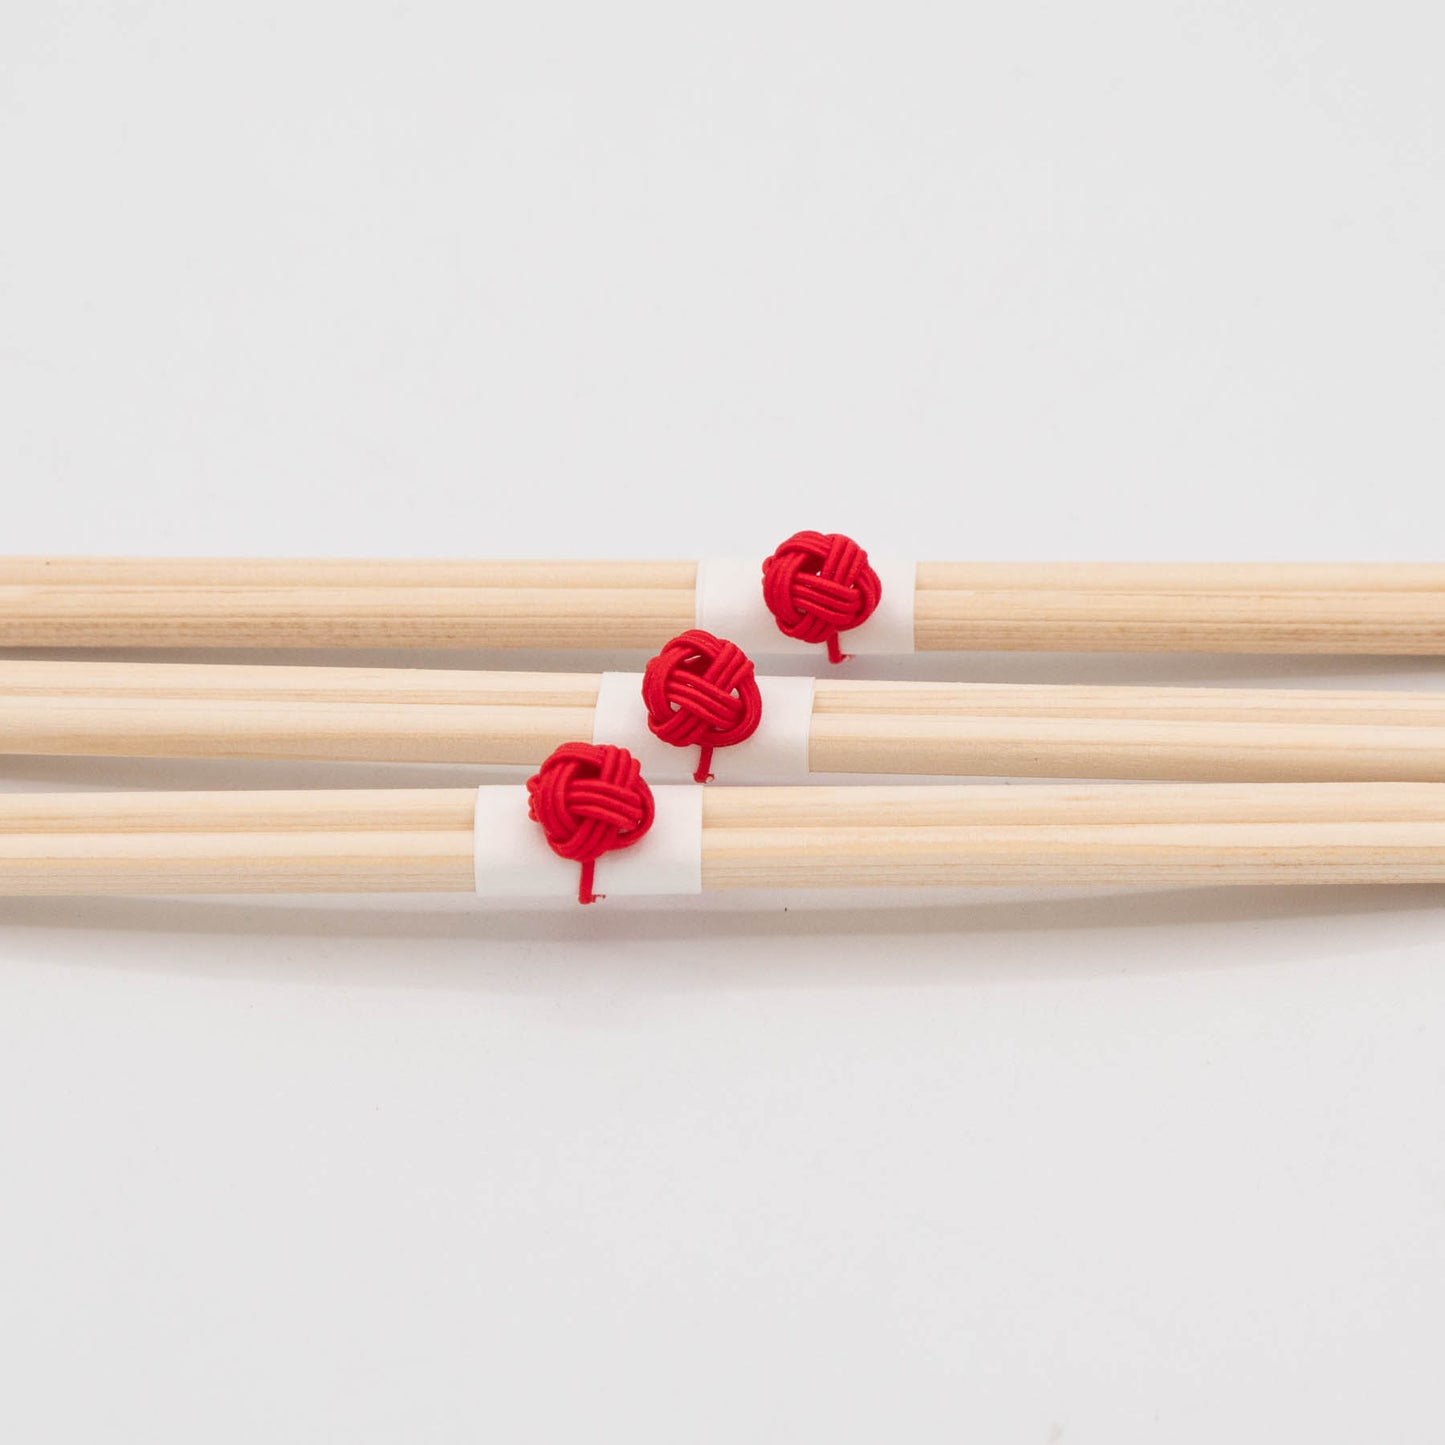 Medetaya Modern - Chopsticks 3pcs Set - Red